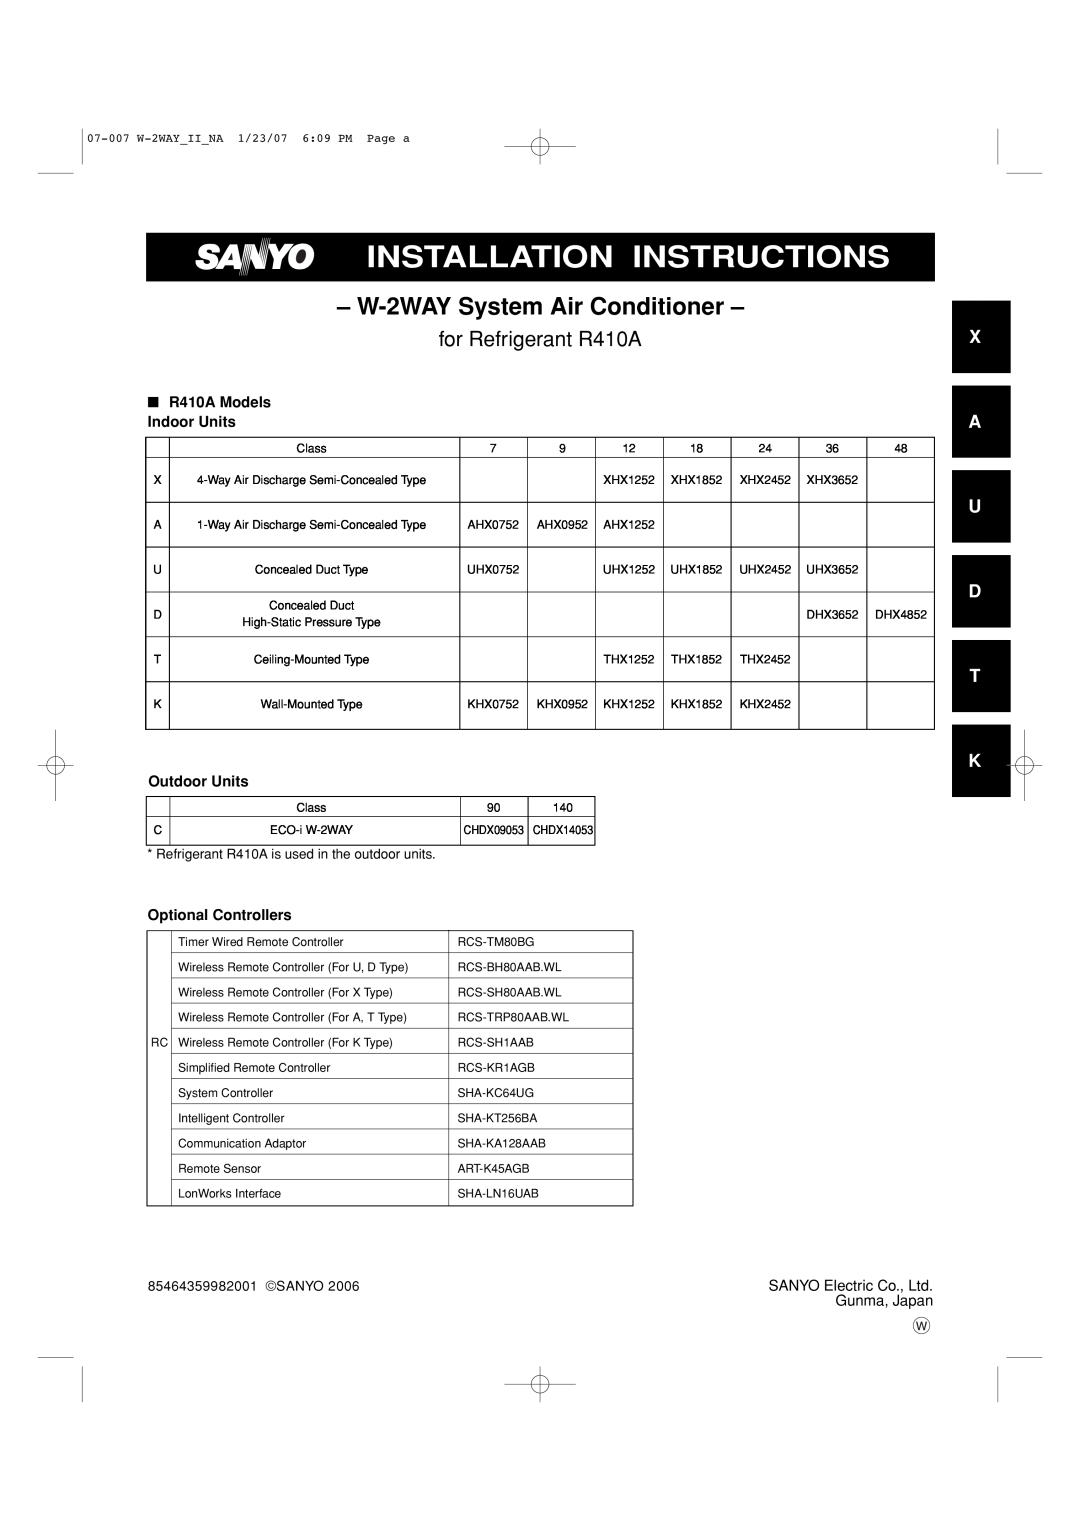 Sanyo 85464359982001 installation instructions X A U D T K, R410A Models Indoor Units, Outdoor Units, Optional Controllers 